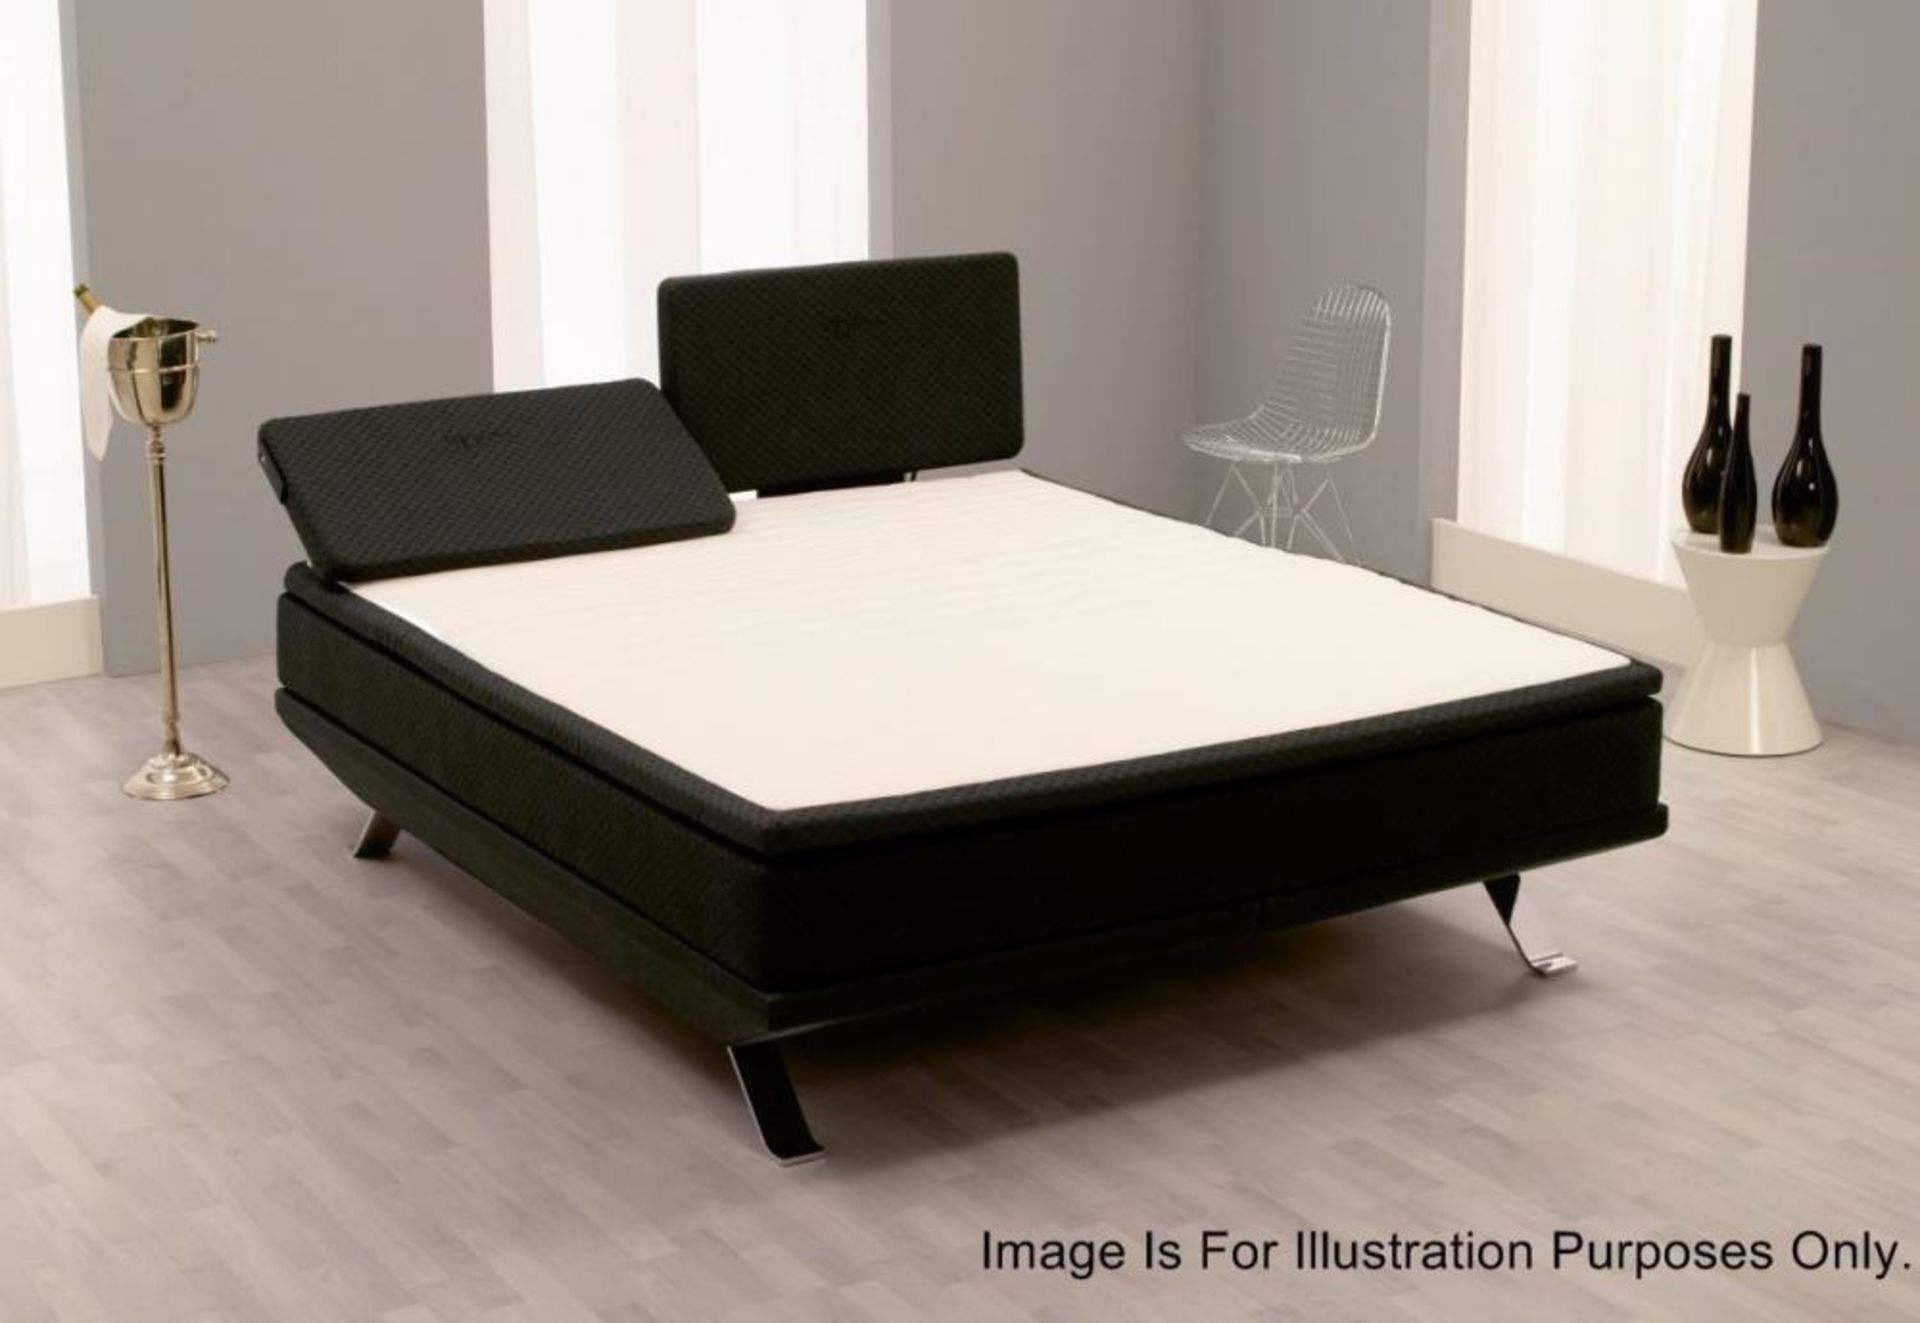 1 x Jensen EDEN Adjustable Superking Bed Base - W180 x L210 x H34cm - Colour: Black - CL087 - Ref: 2 - Image 6 of 13